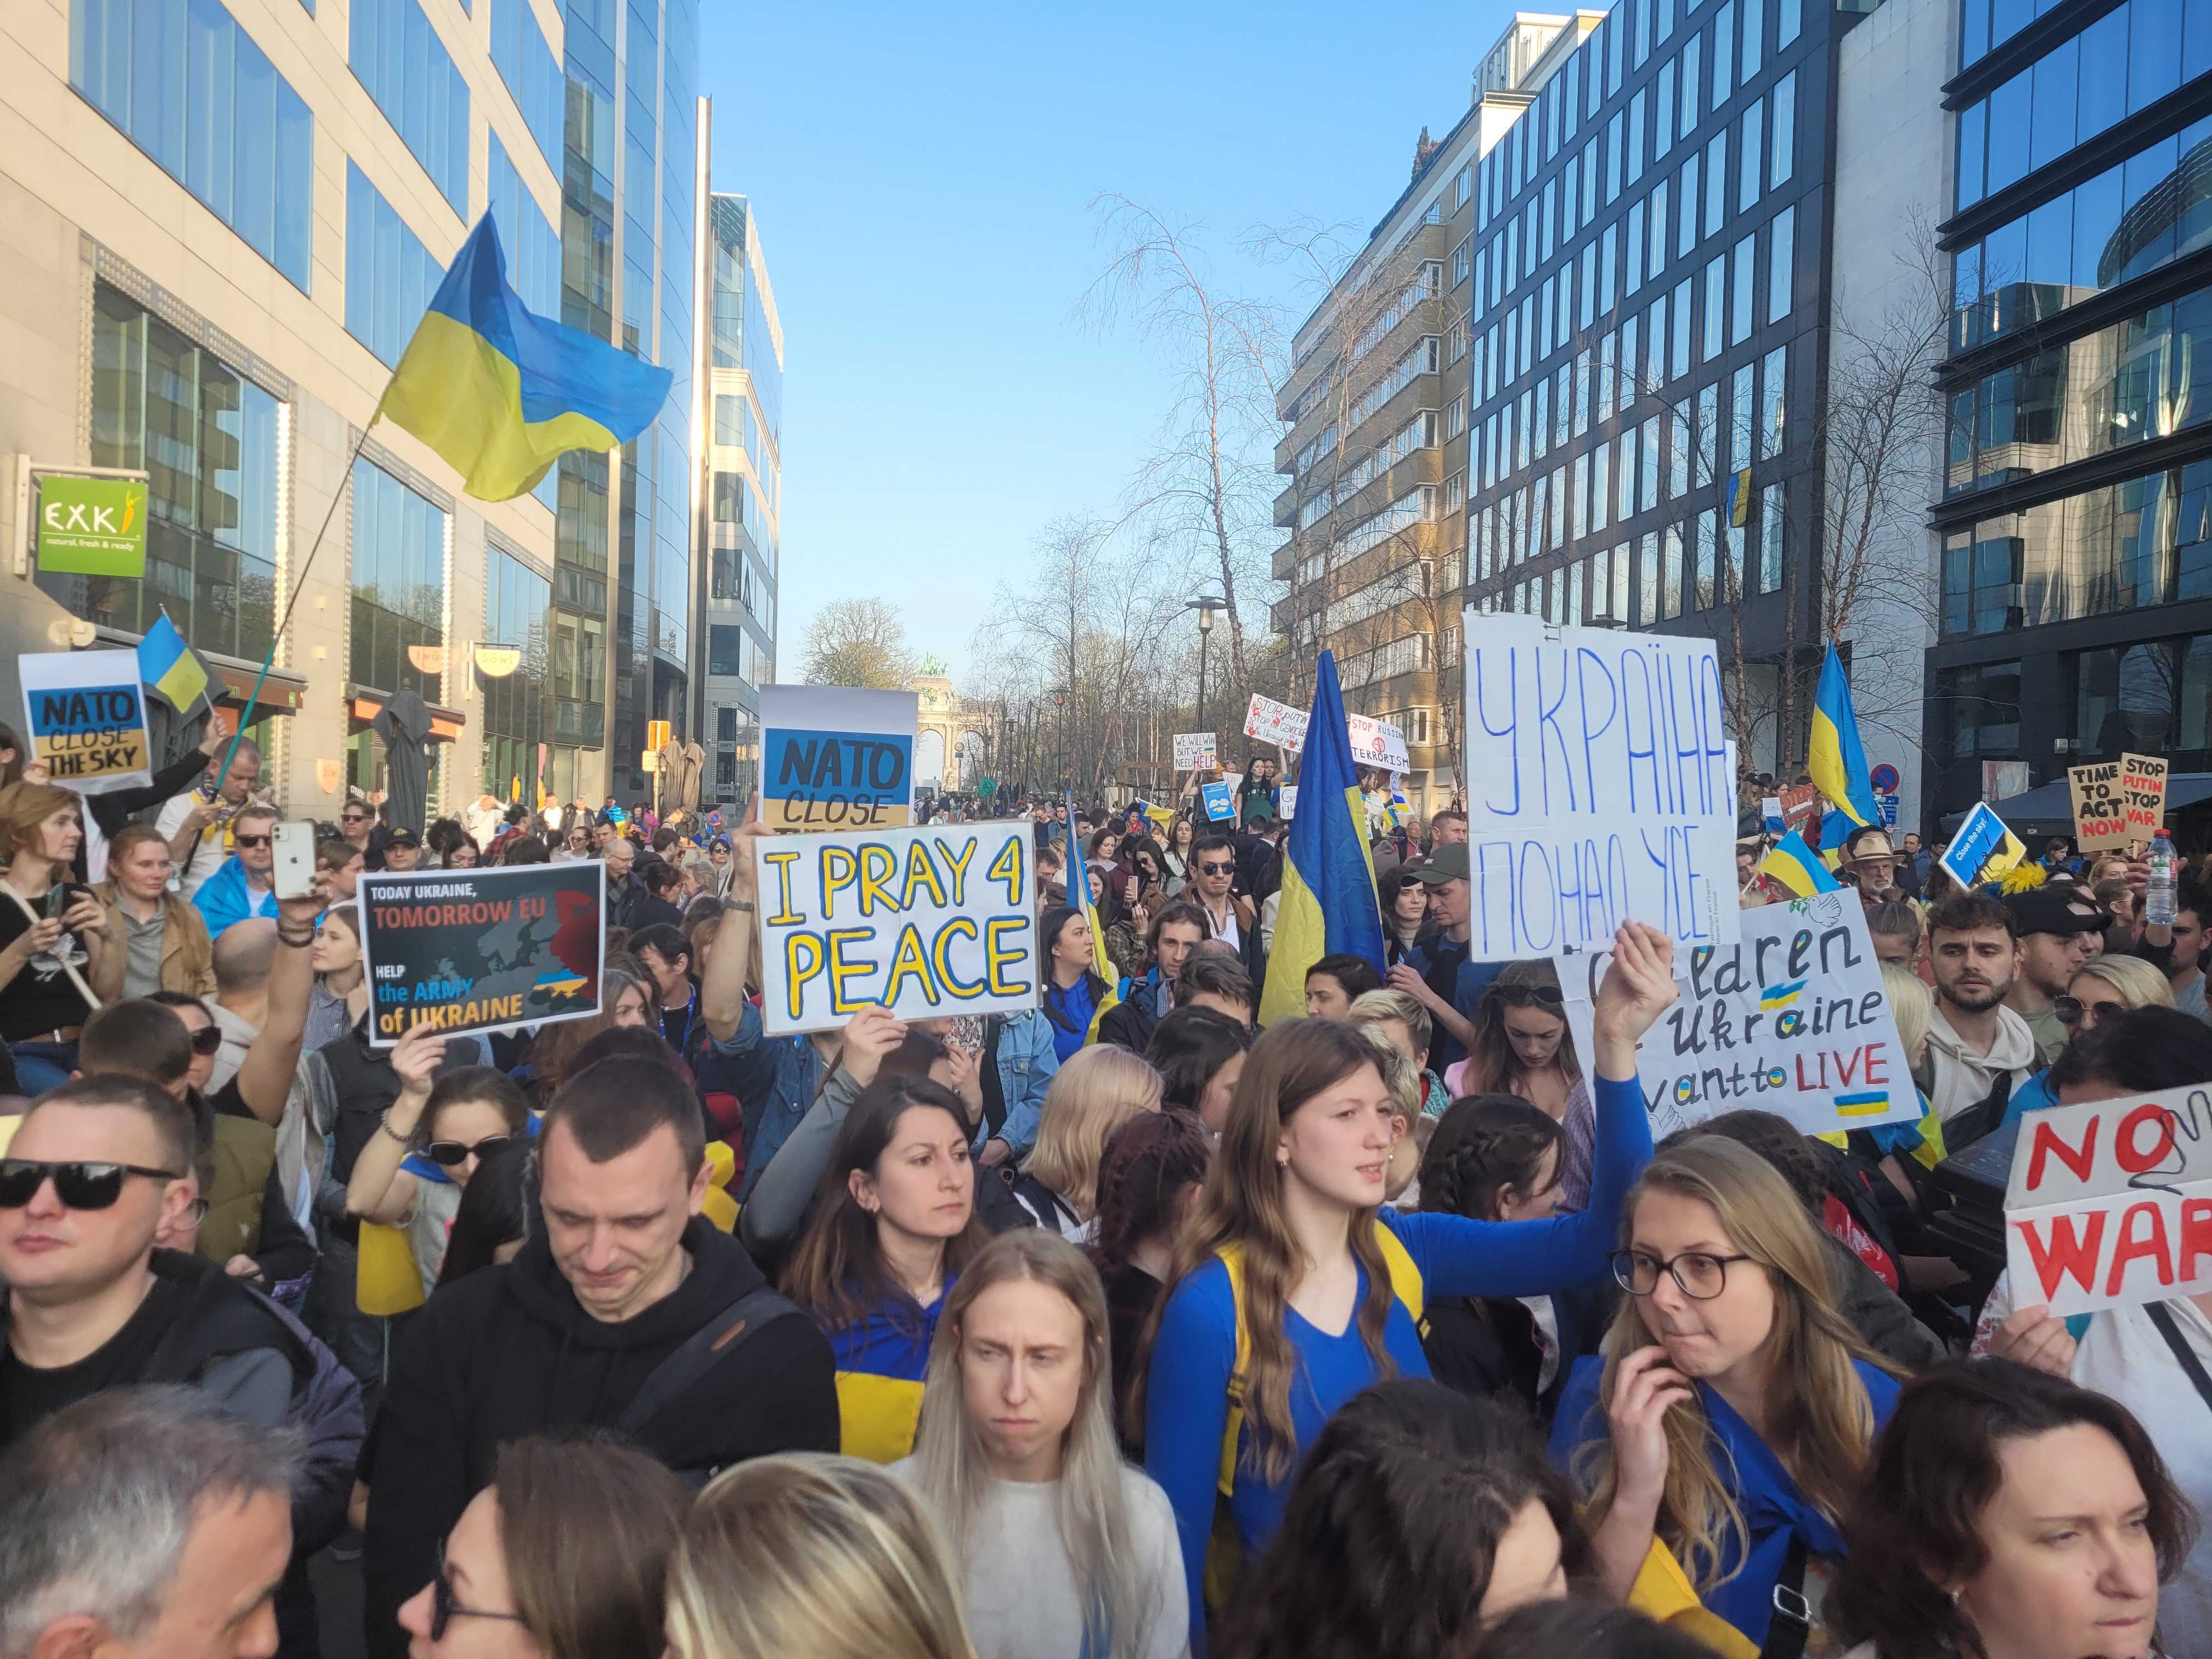 Ukrainian refugees, diaspora rally in Brussels during NATO summit, demand more Western support for Ukraine